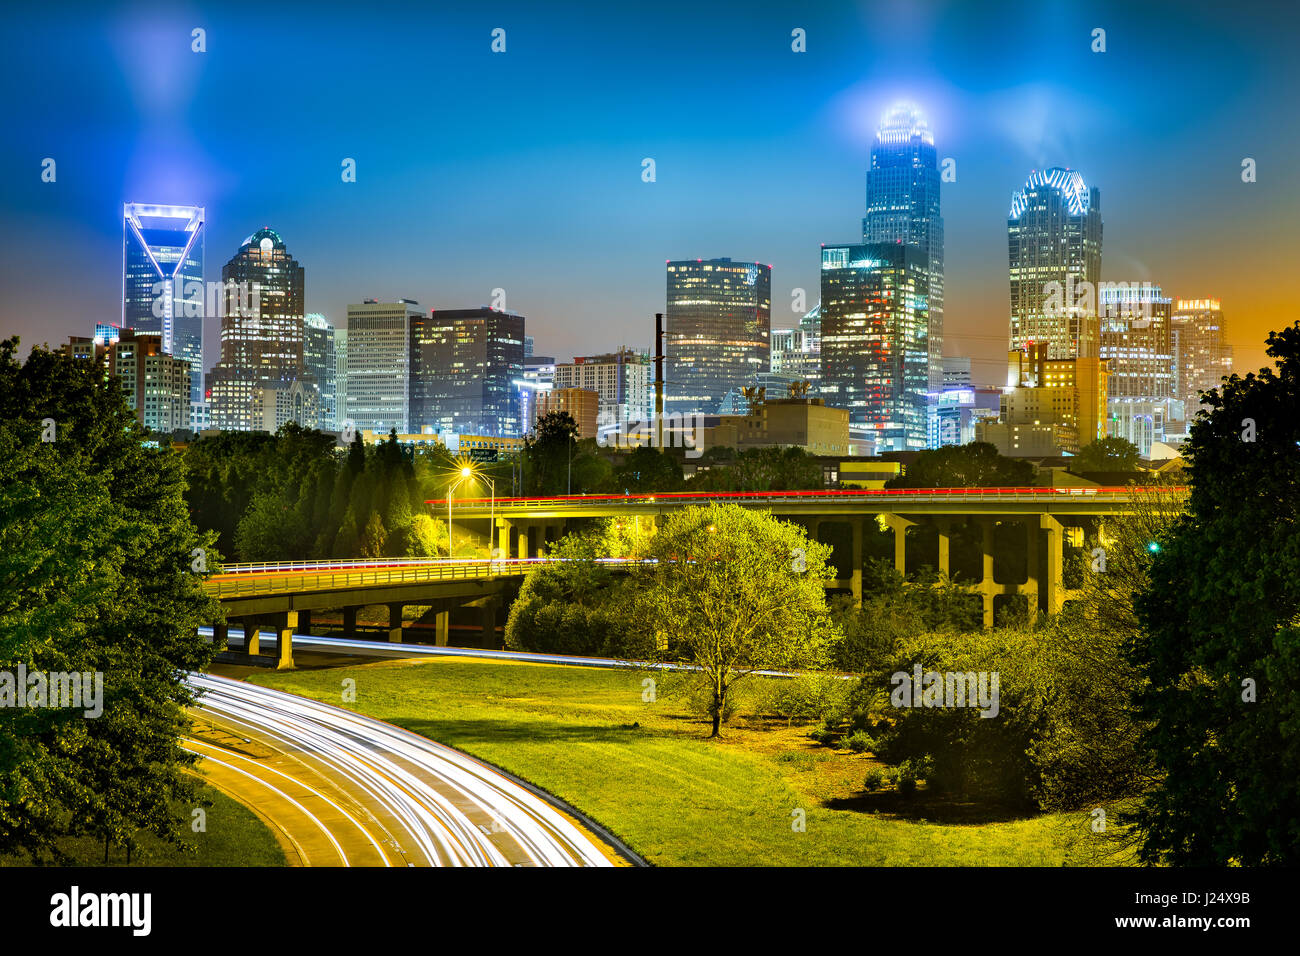 Traffic light trails in Charlotte, North Carolina. The city skyline glows on a foggy night. Stock Photo